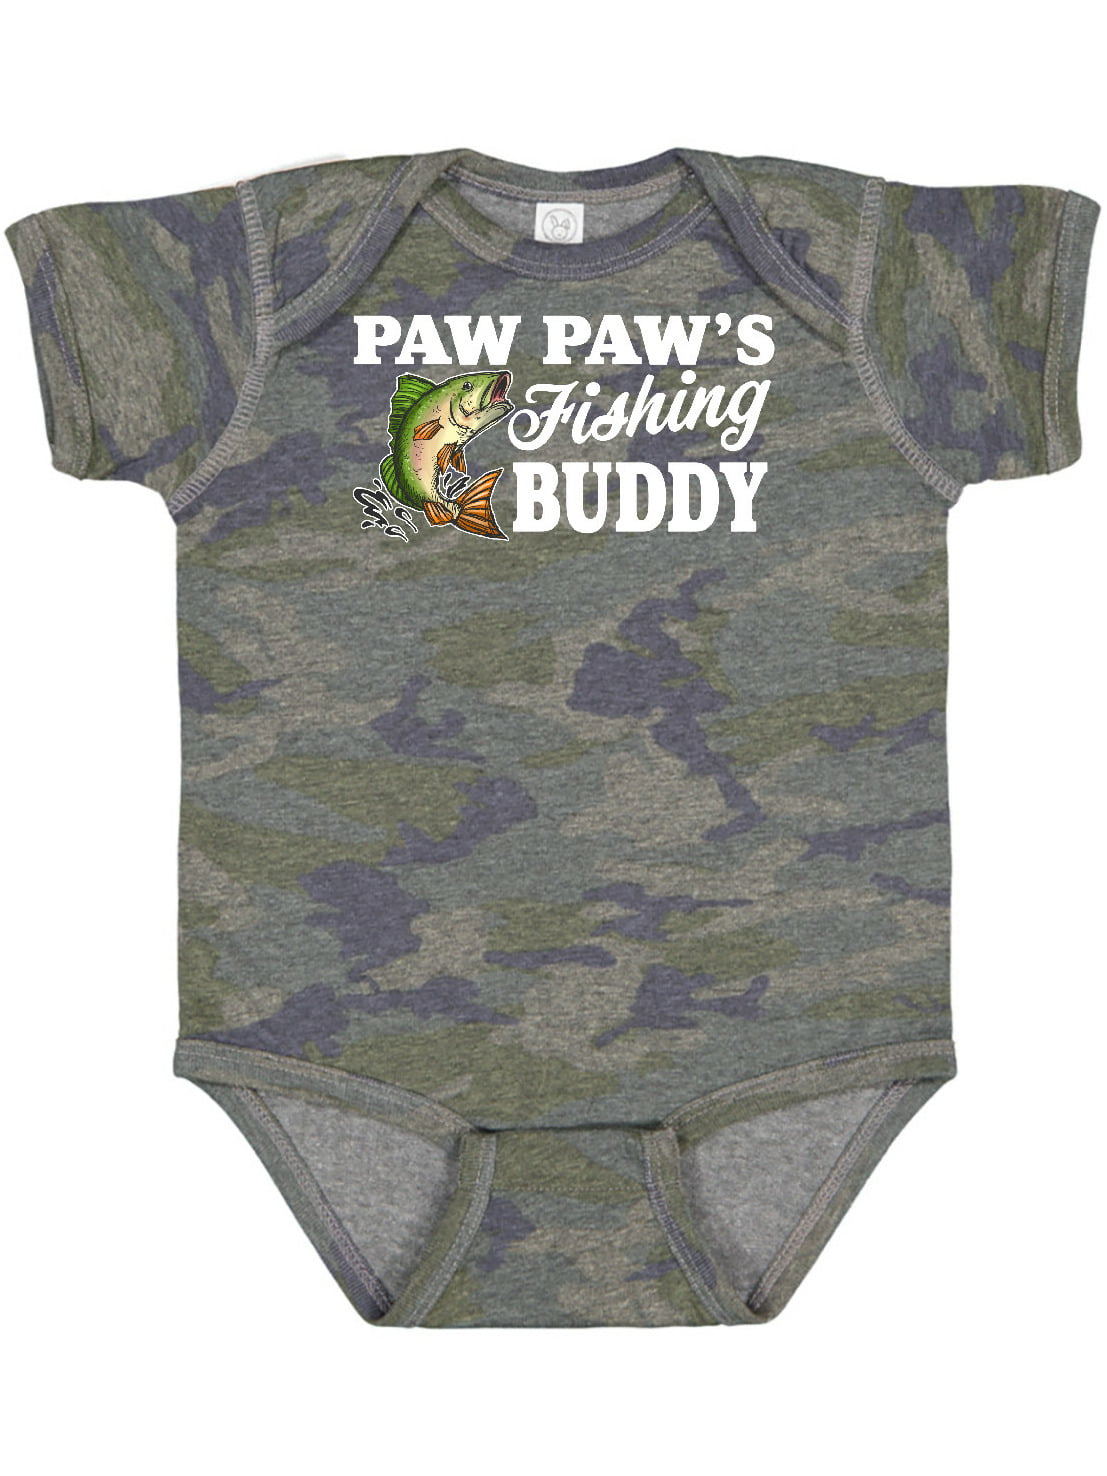 Daddy's Fishing Buddy Camo T-shirt Camouflage Children's T-shirt Kids Top Army 